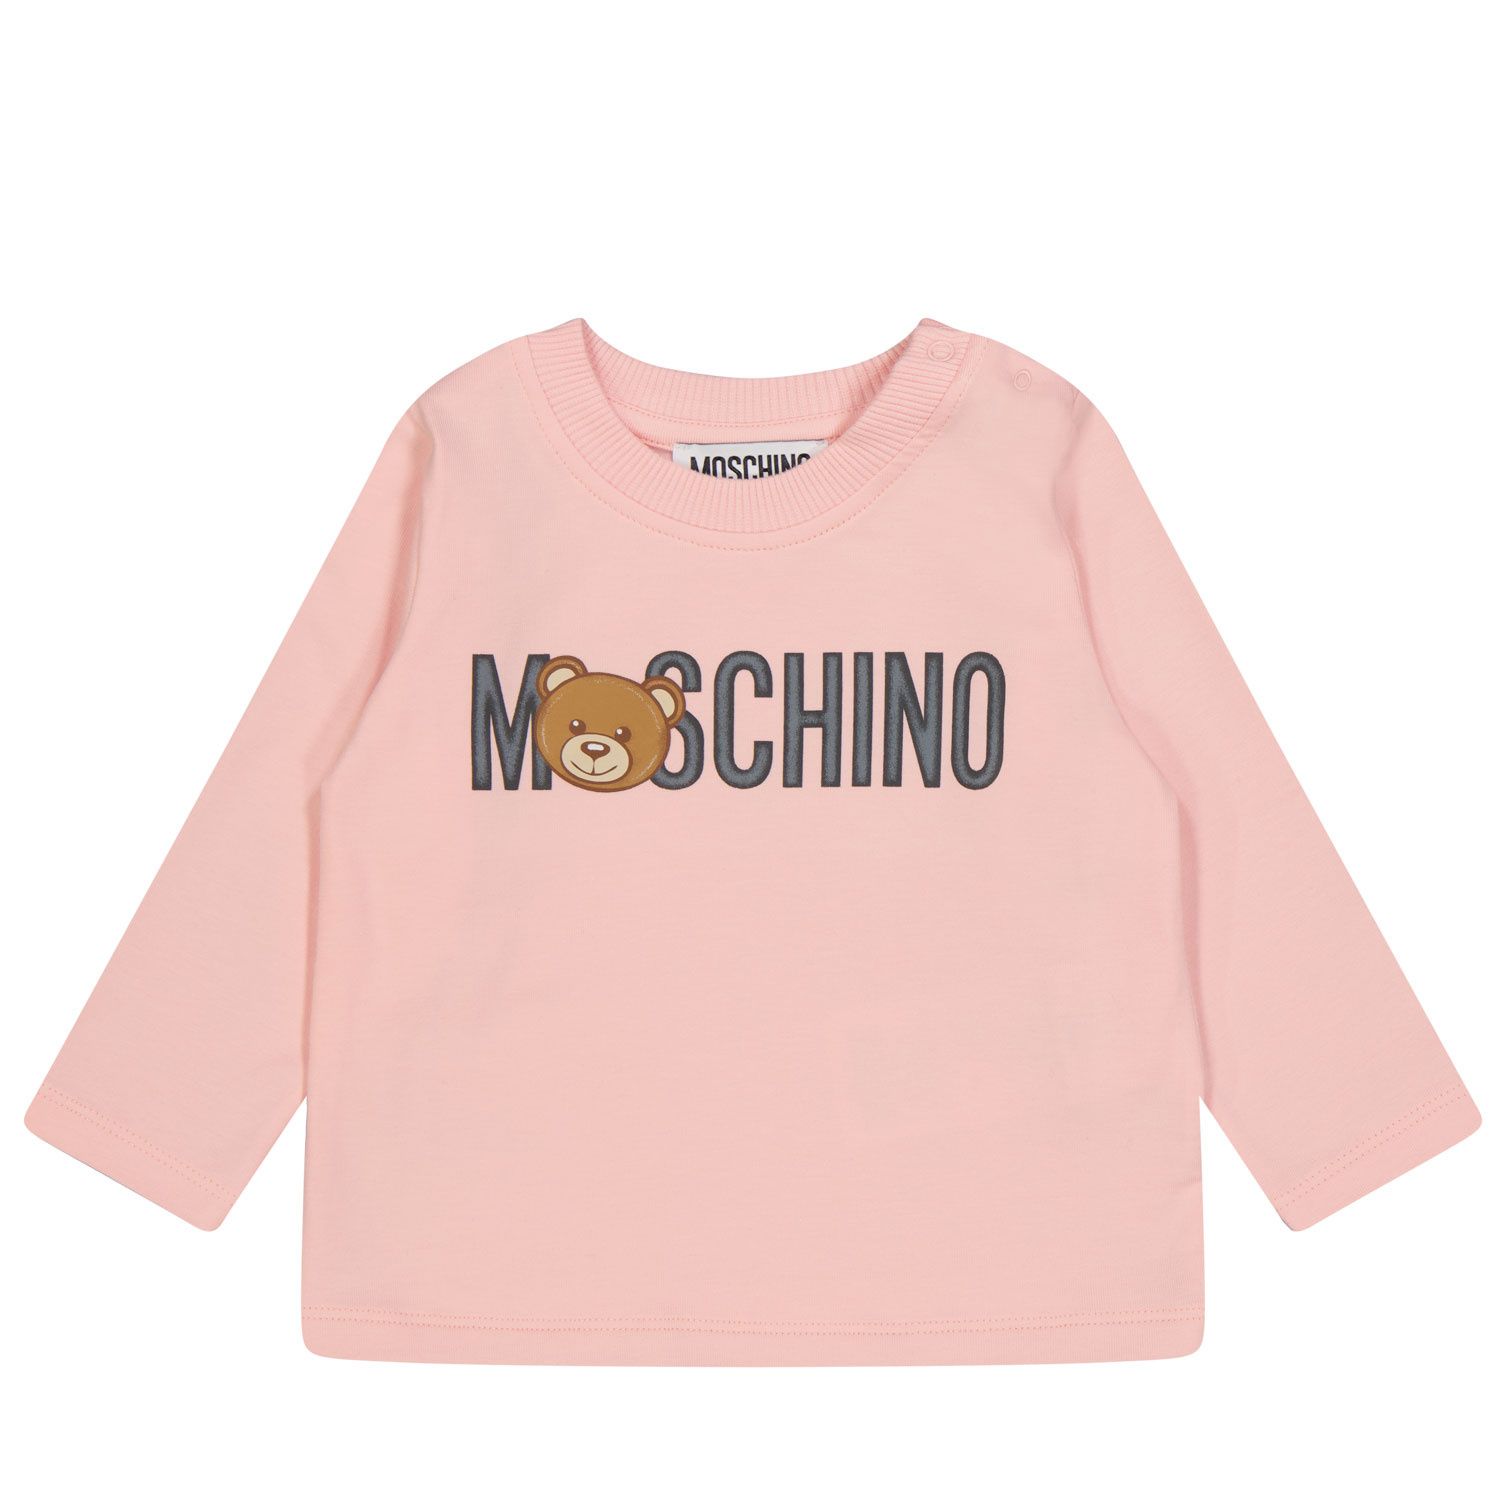 Bild von Moschino MOO00ELBA12 Baby-T-Shirt Hellrosa